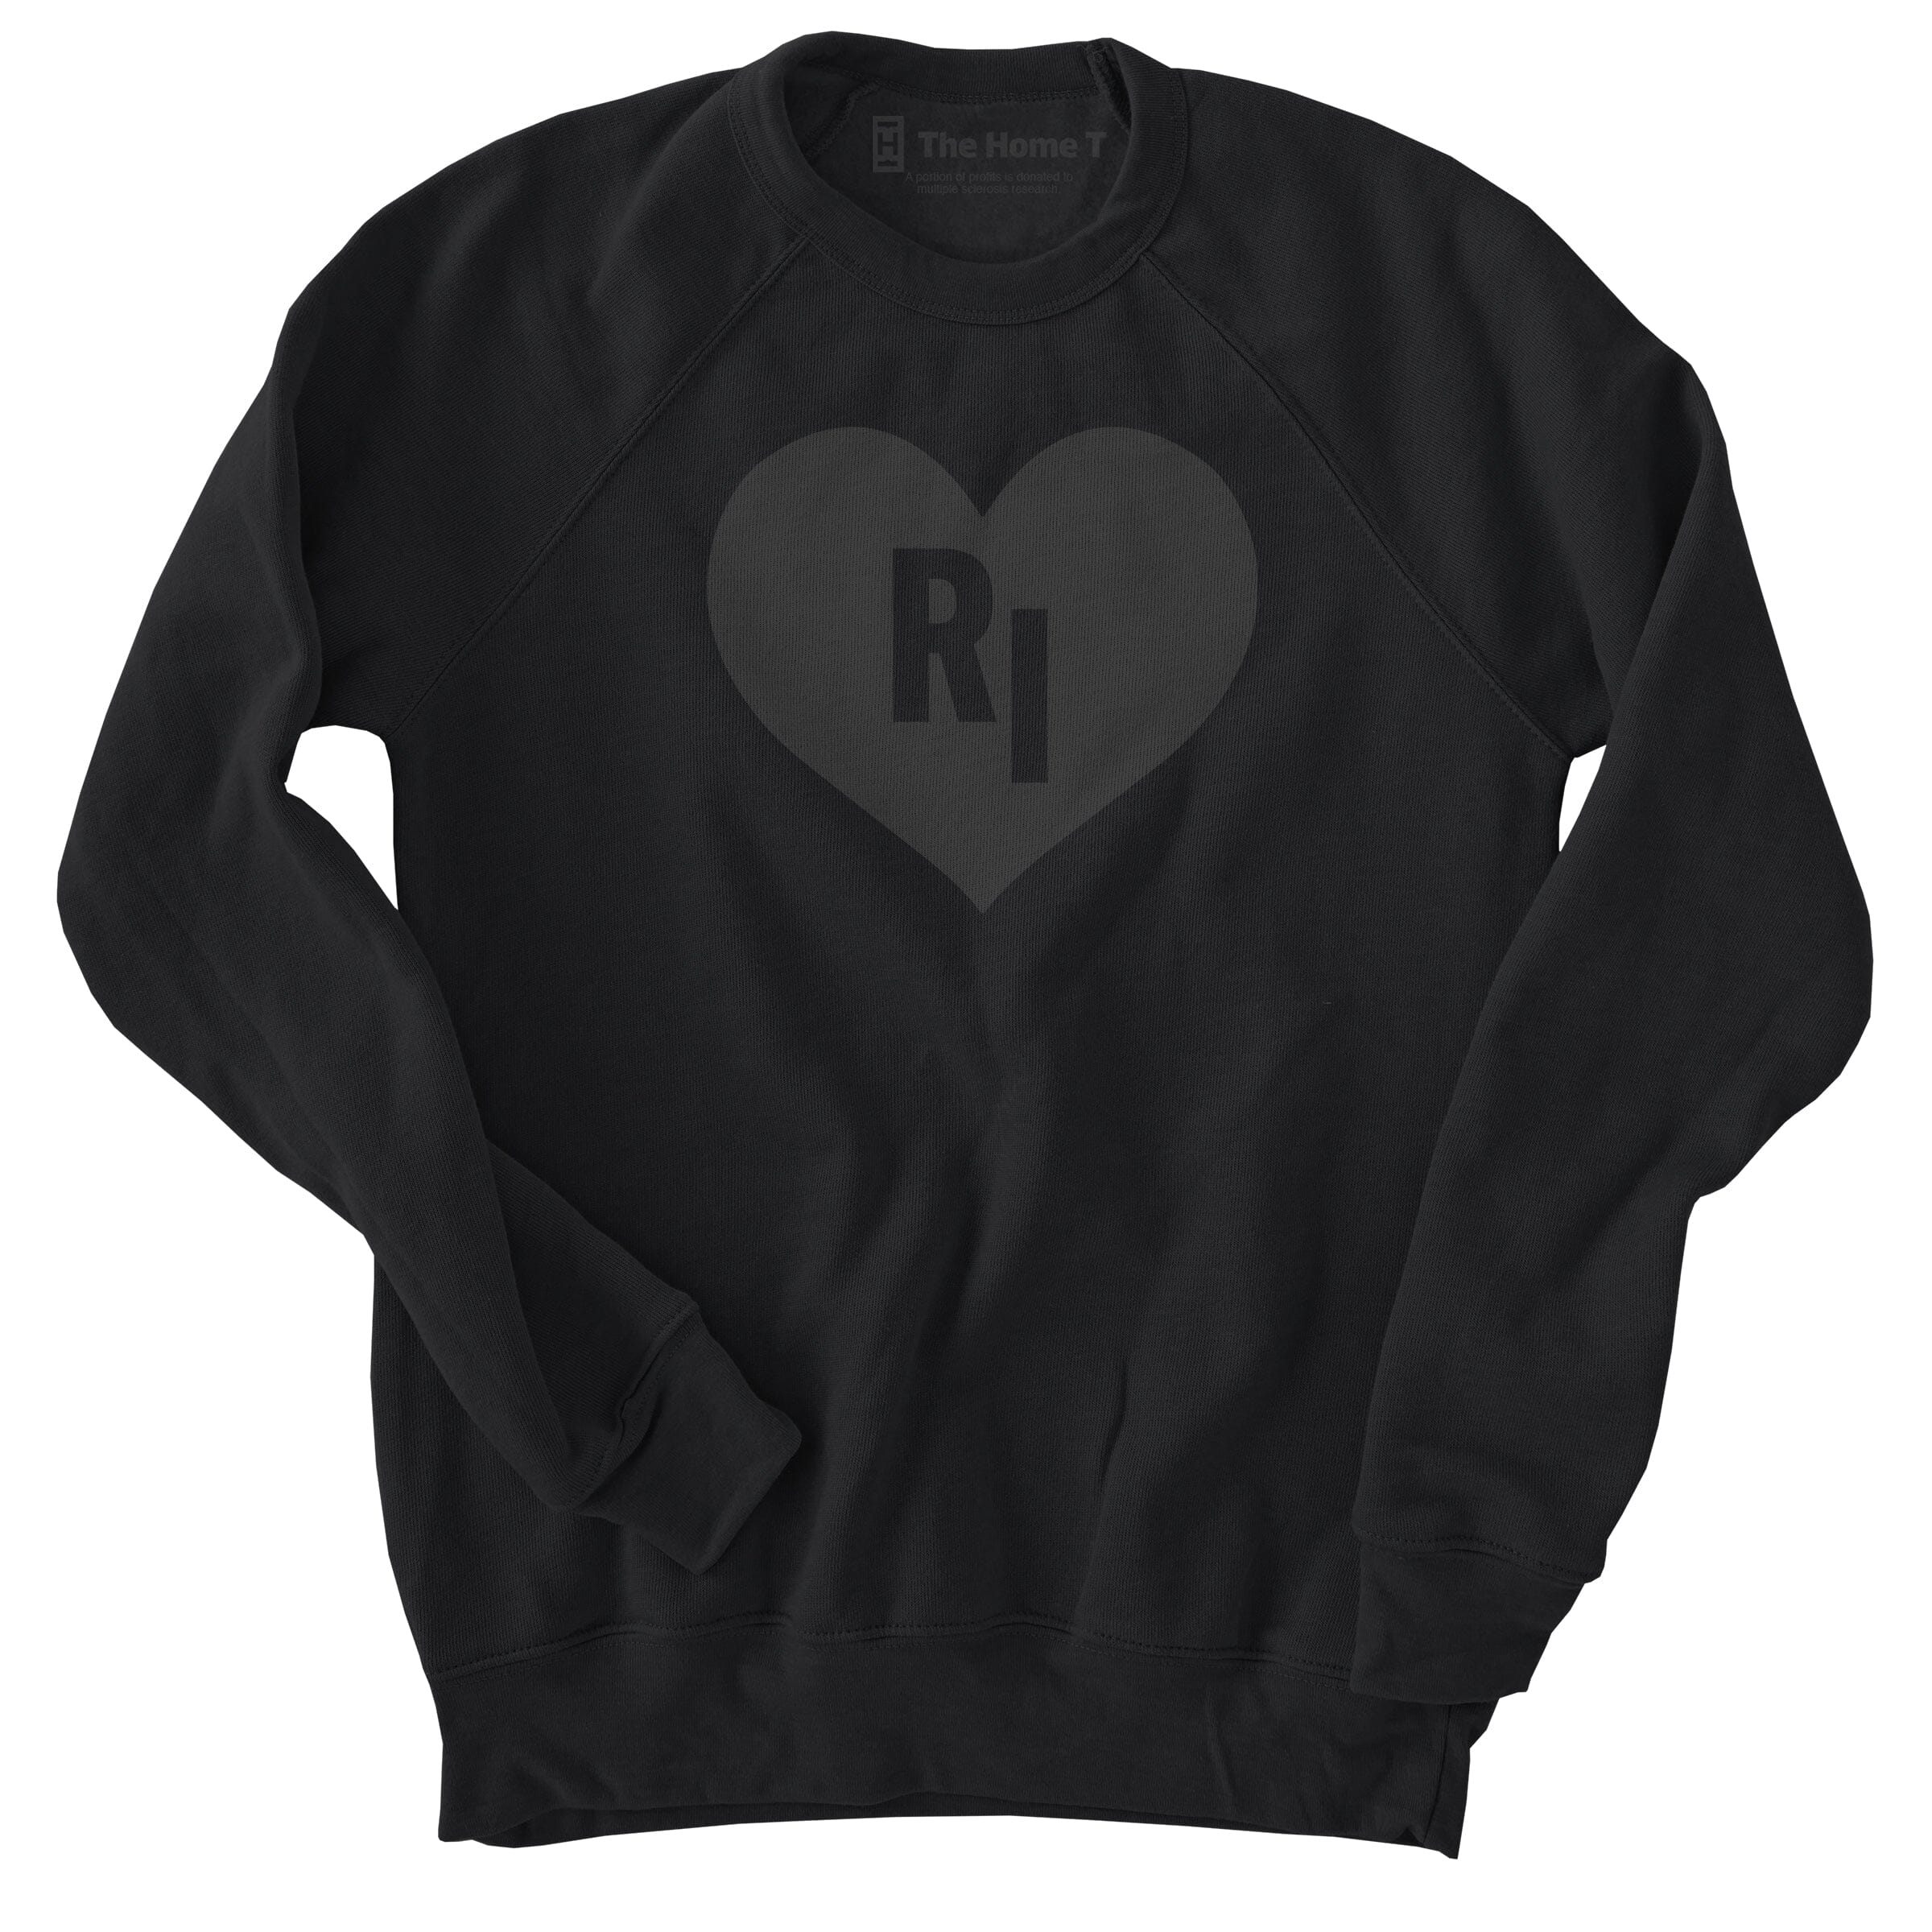 Rhode Island Black on Black Heart